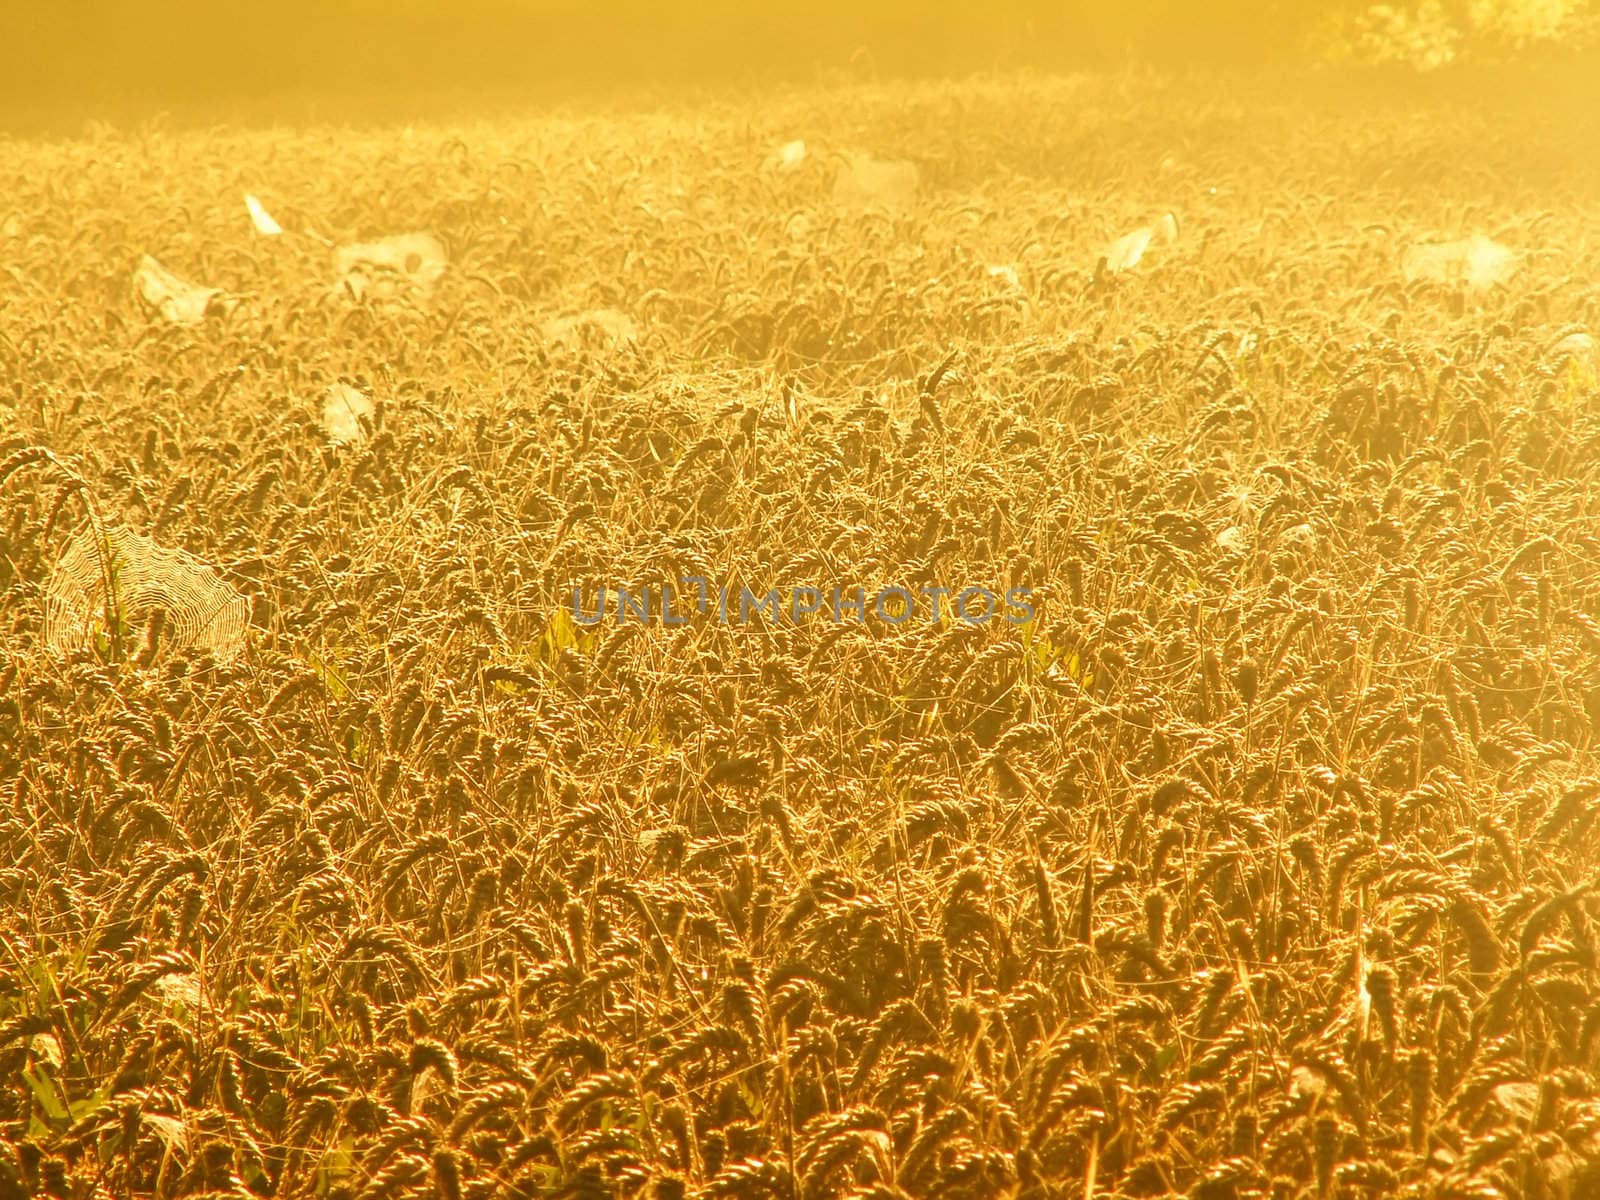 cobwebs  in the golden wheat by njaj